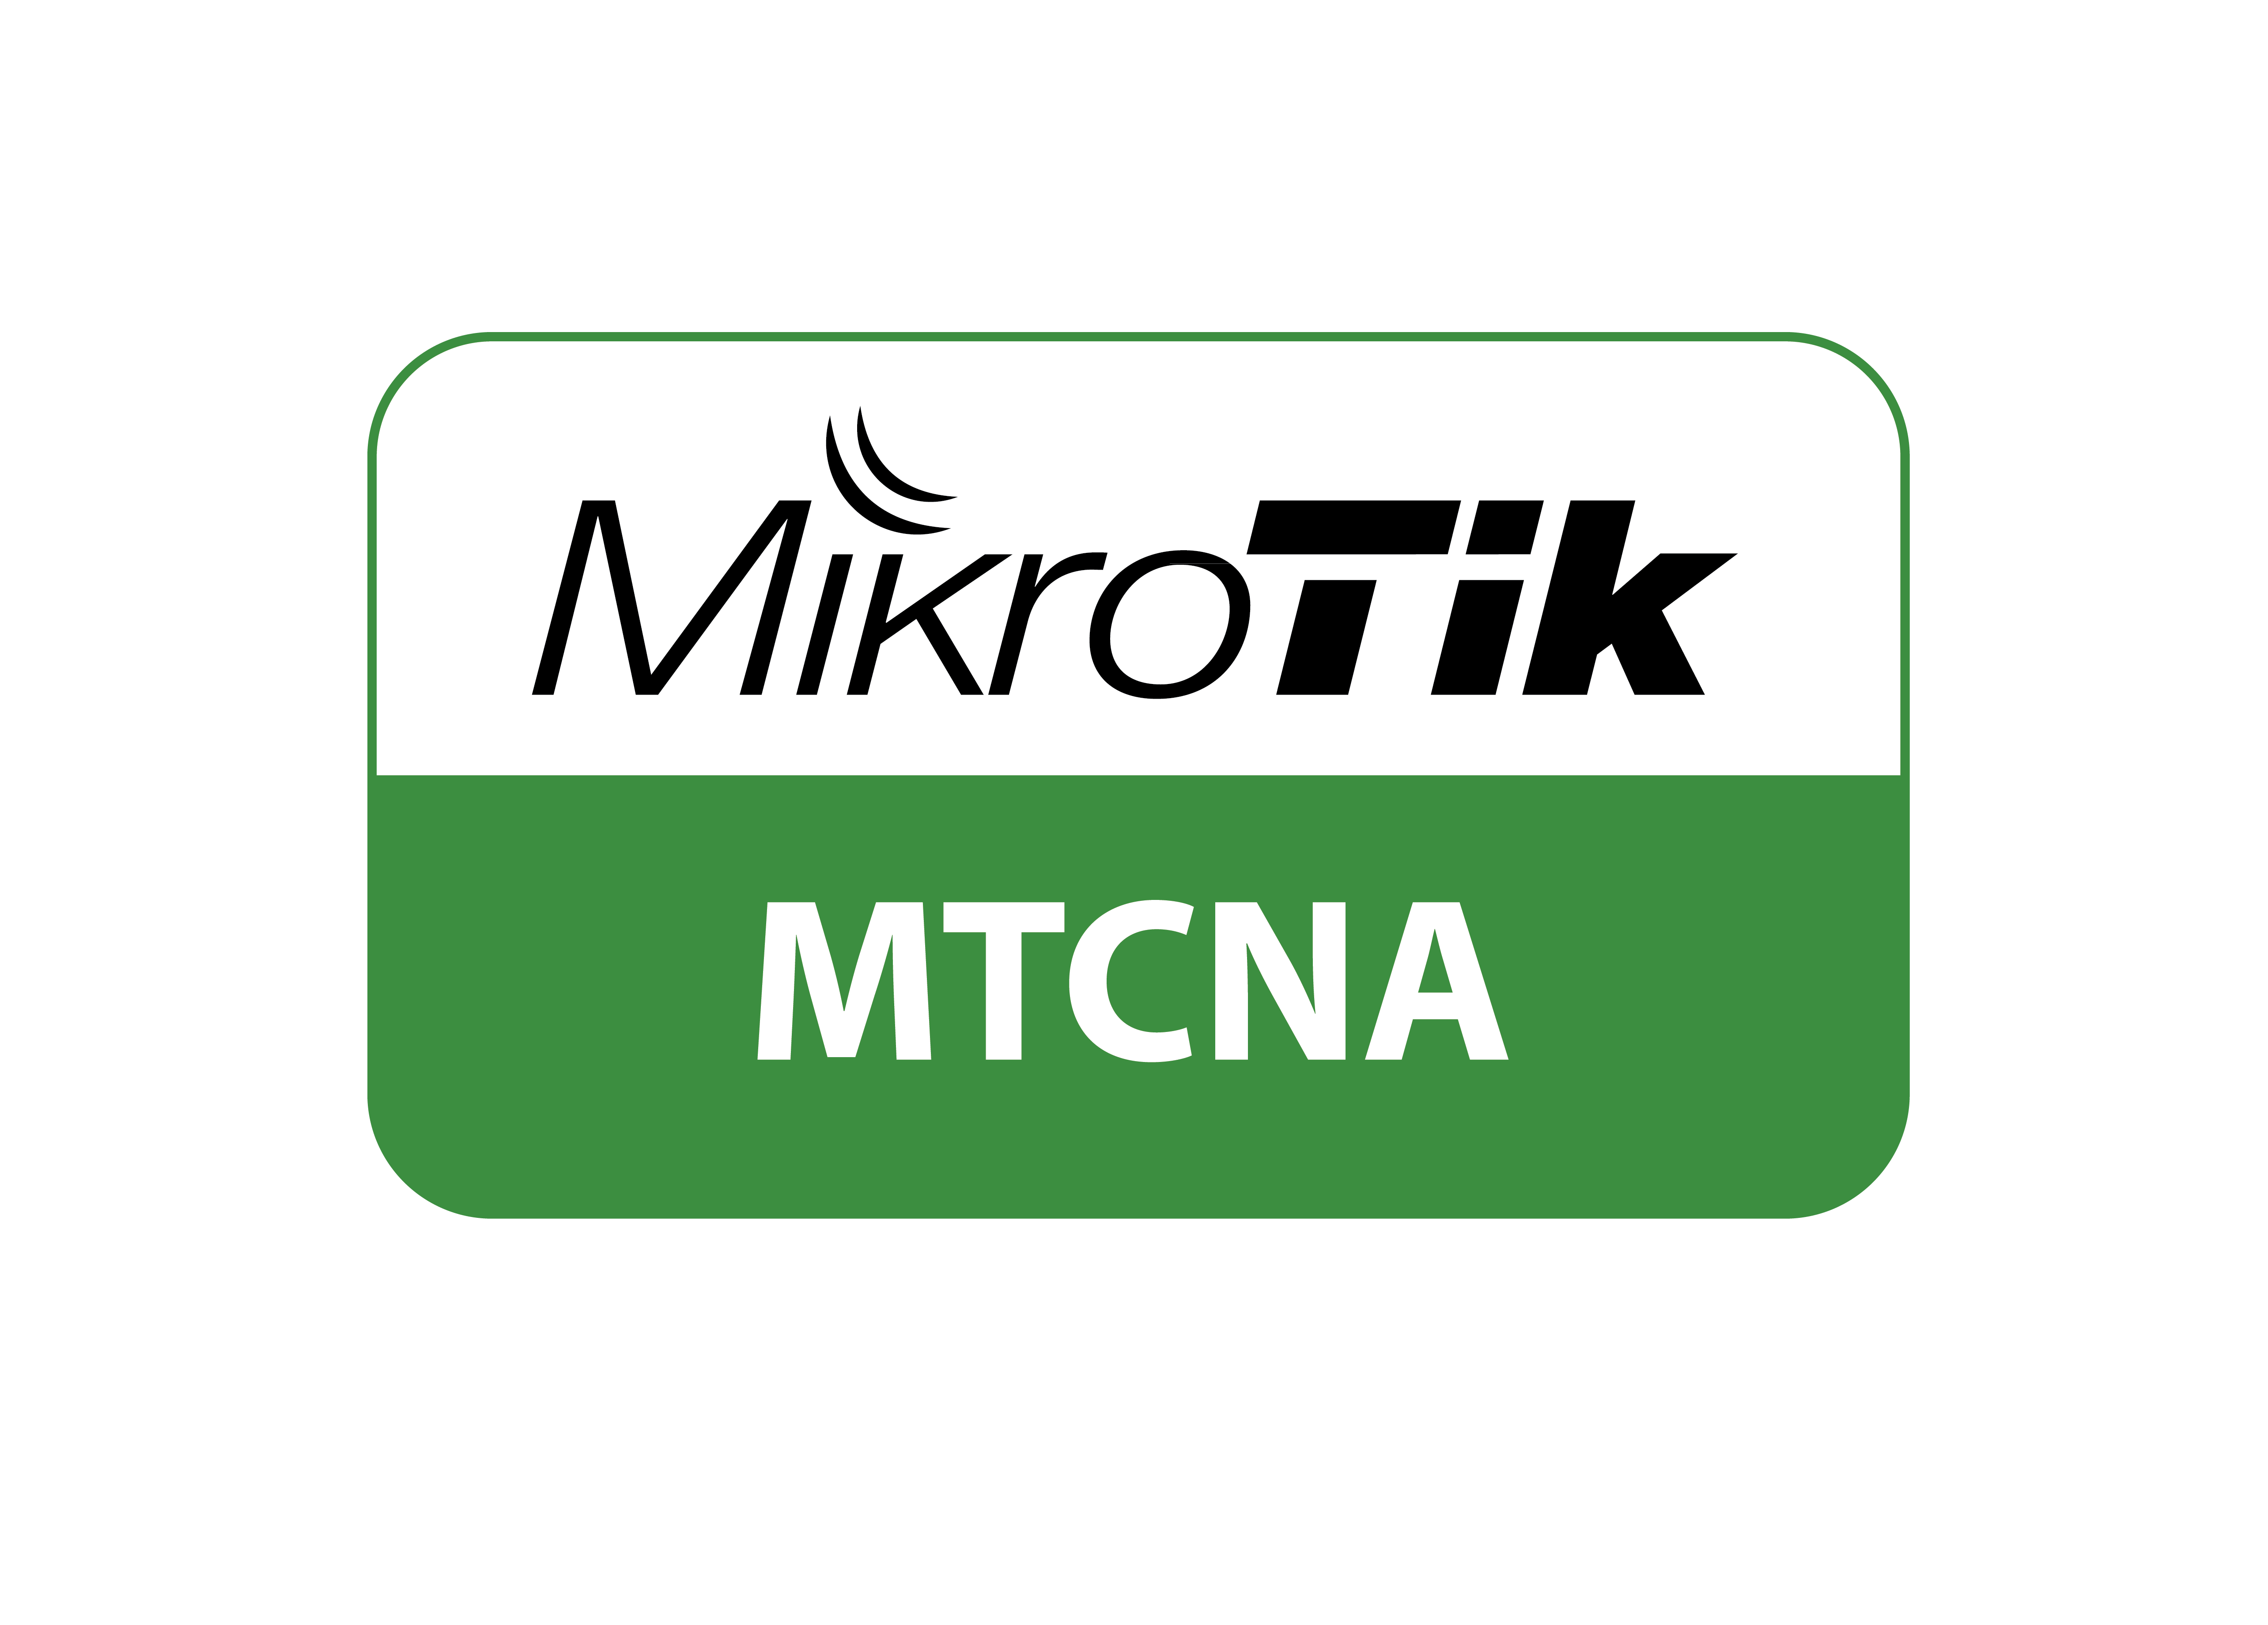 MTCNA (MikroTik Certified Network Associate)